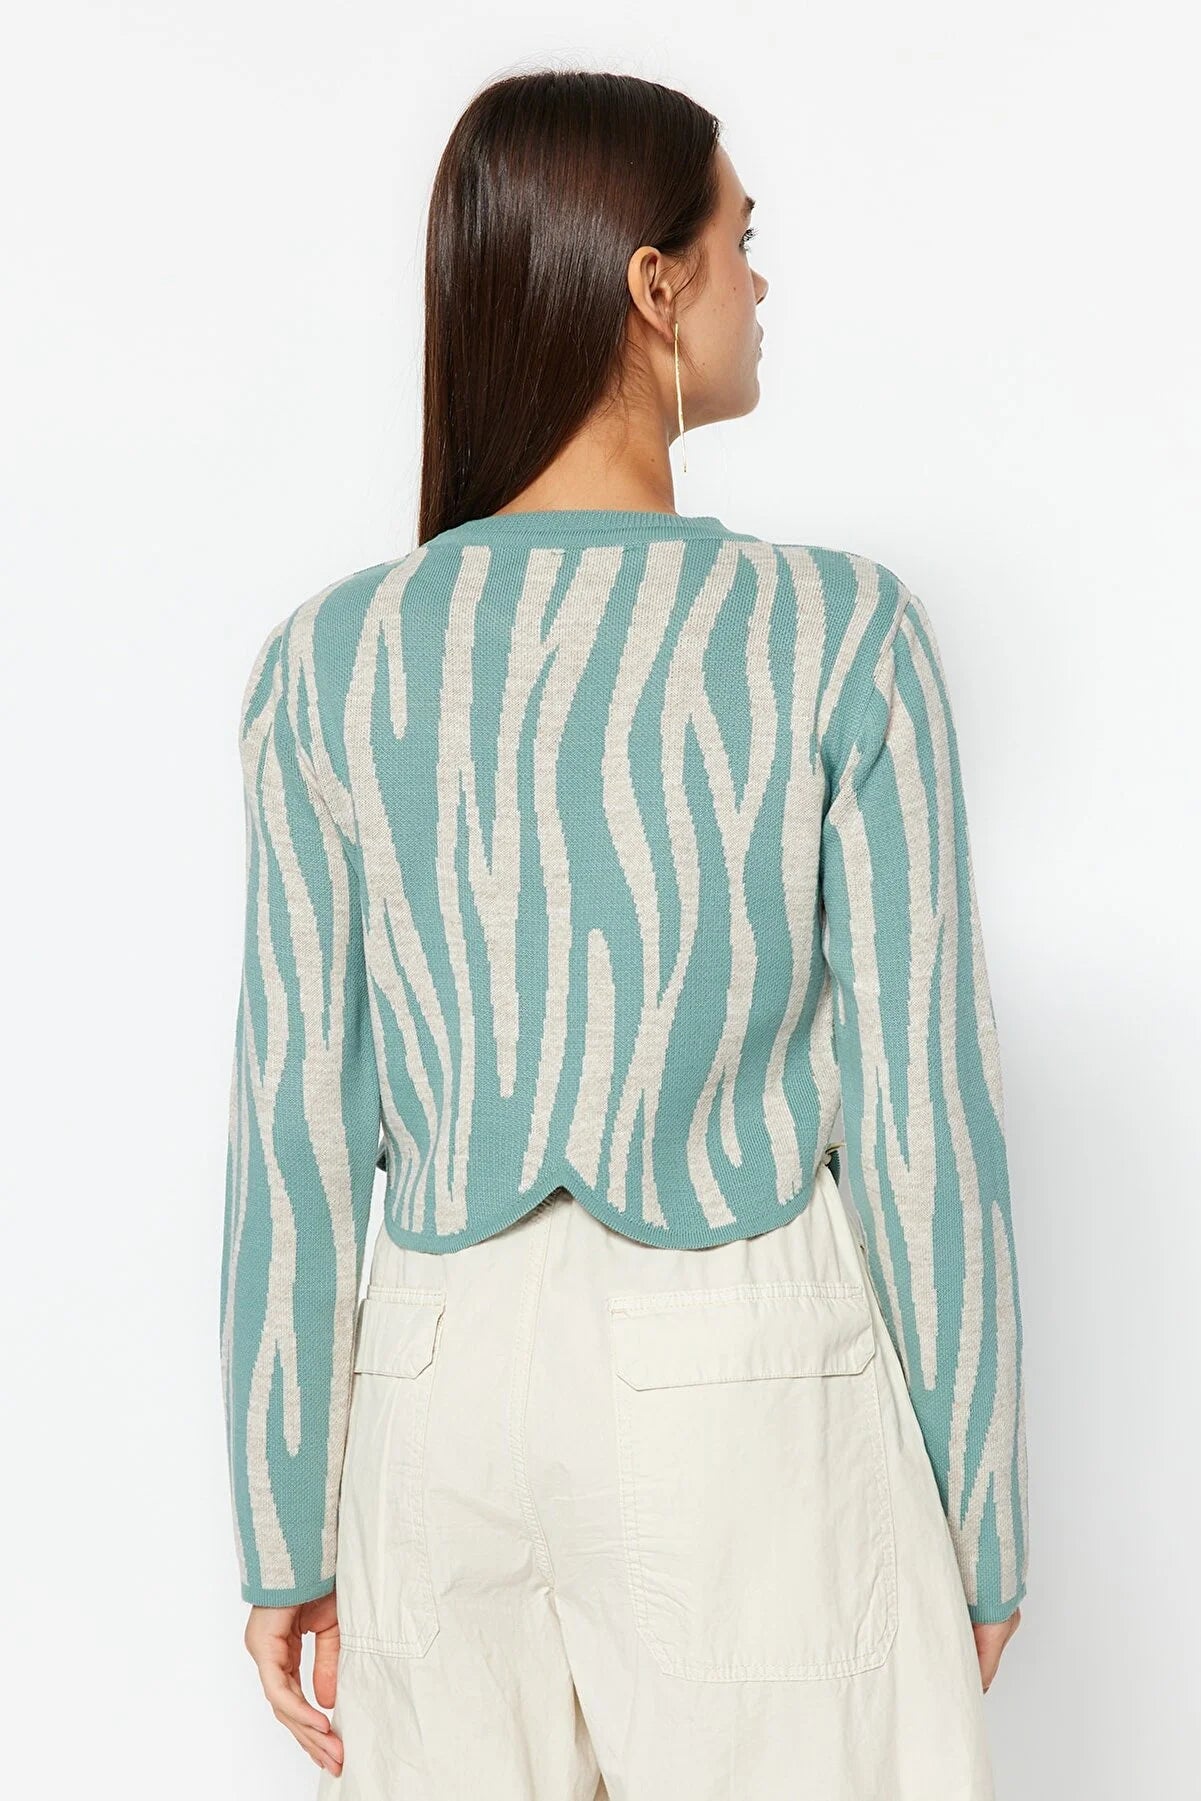 Bombo |cropped sweater-trui met zebra print beige | EXTRA 30% KORTING